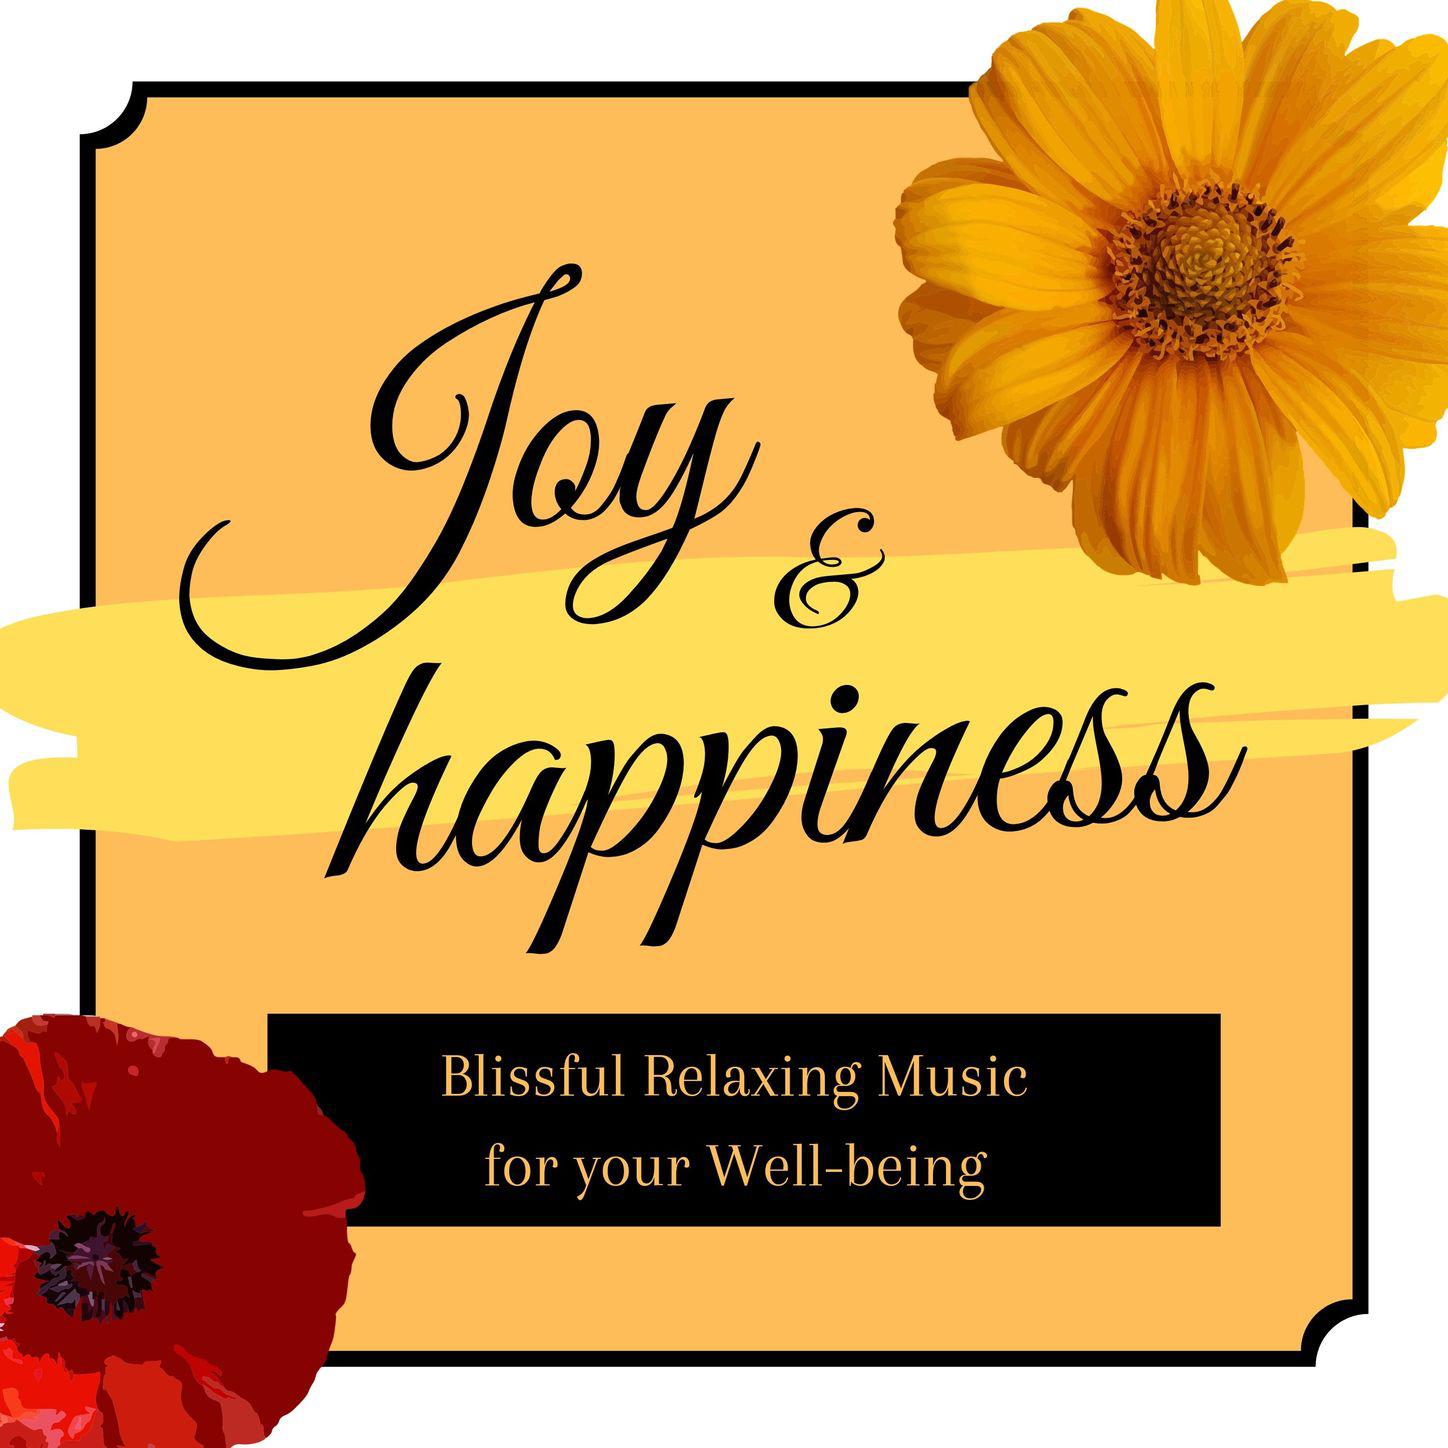 Joy & Happiness